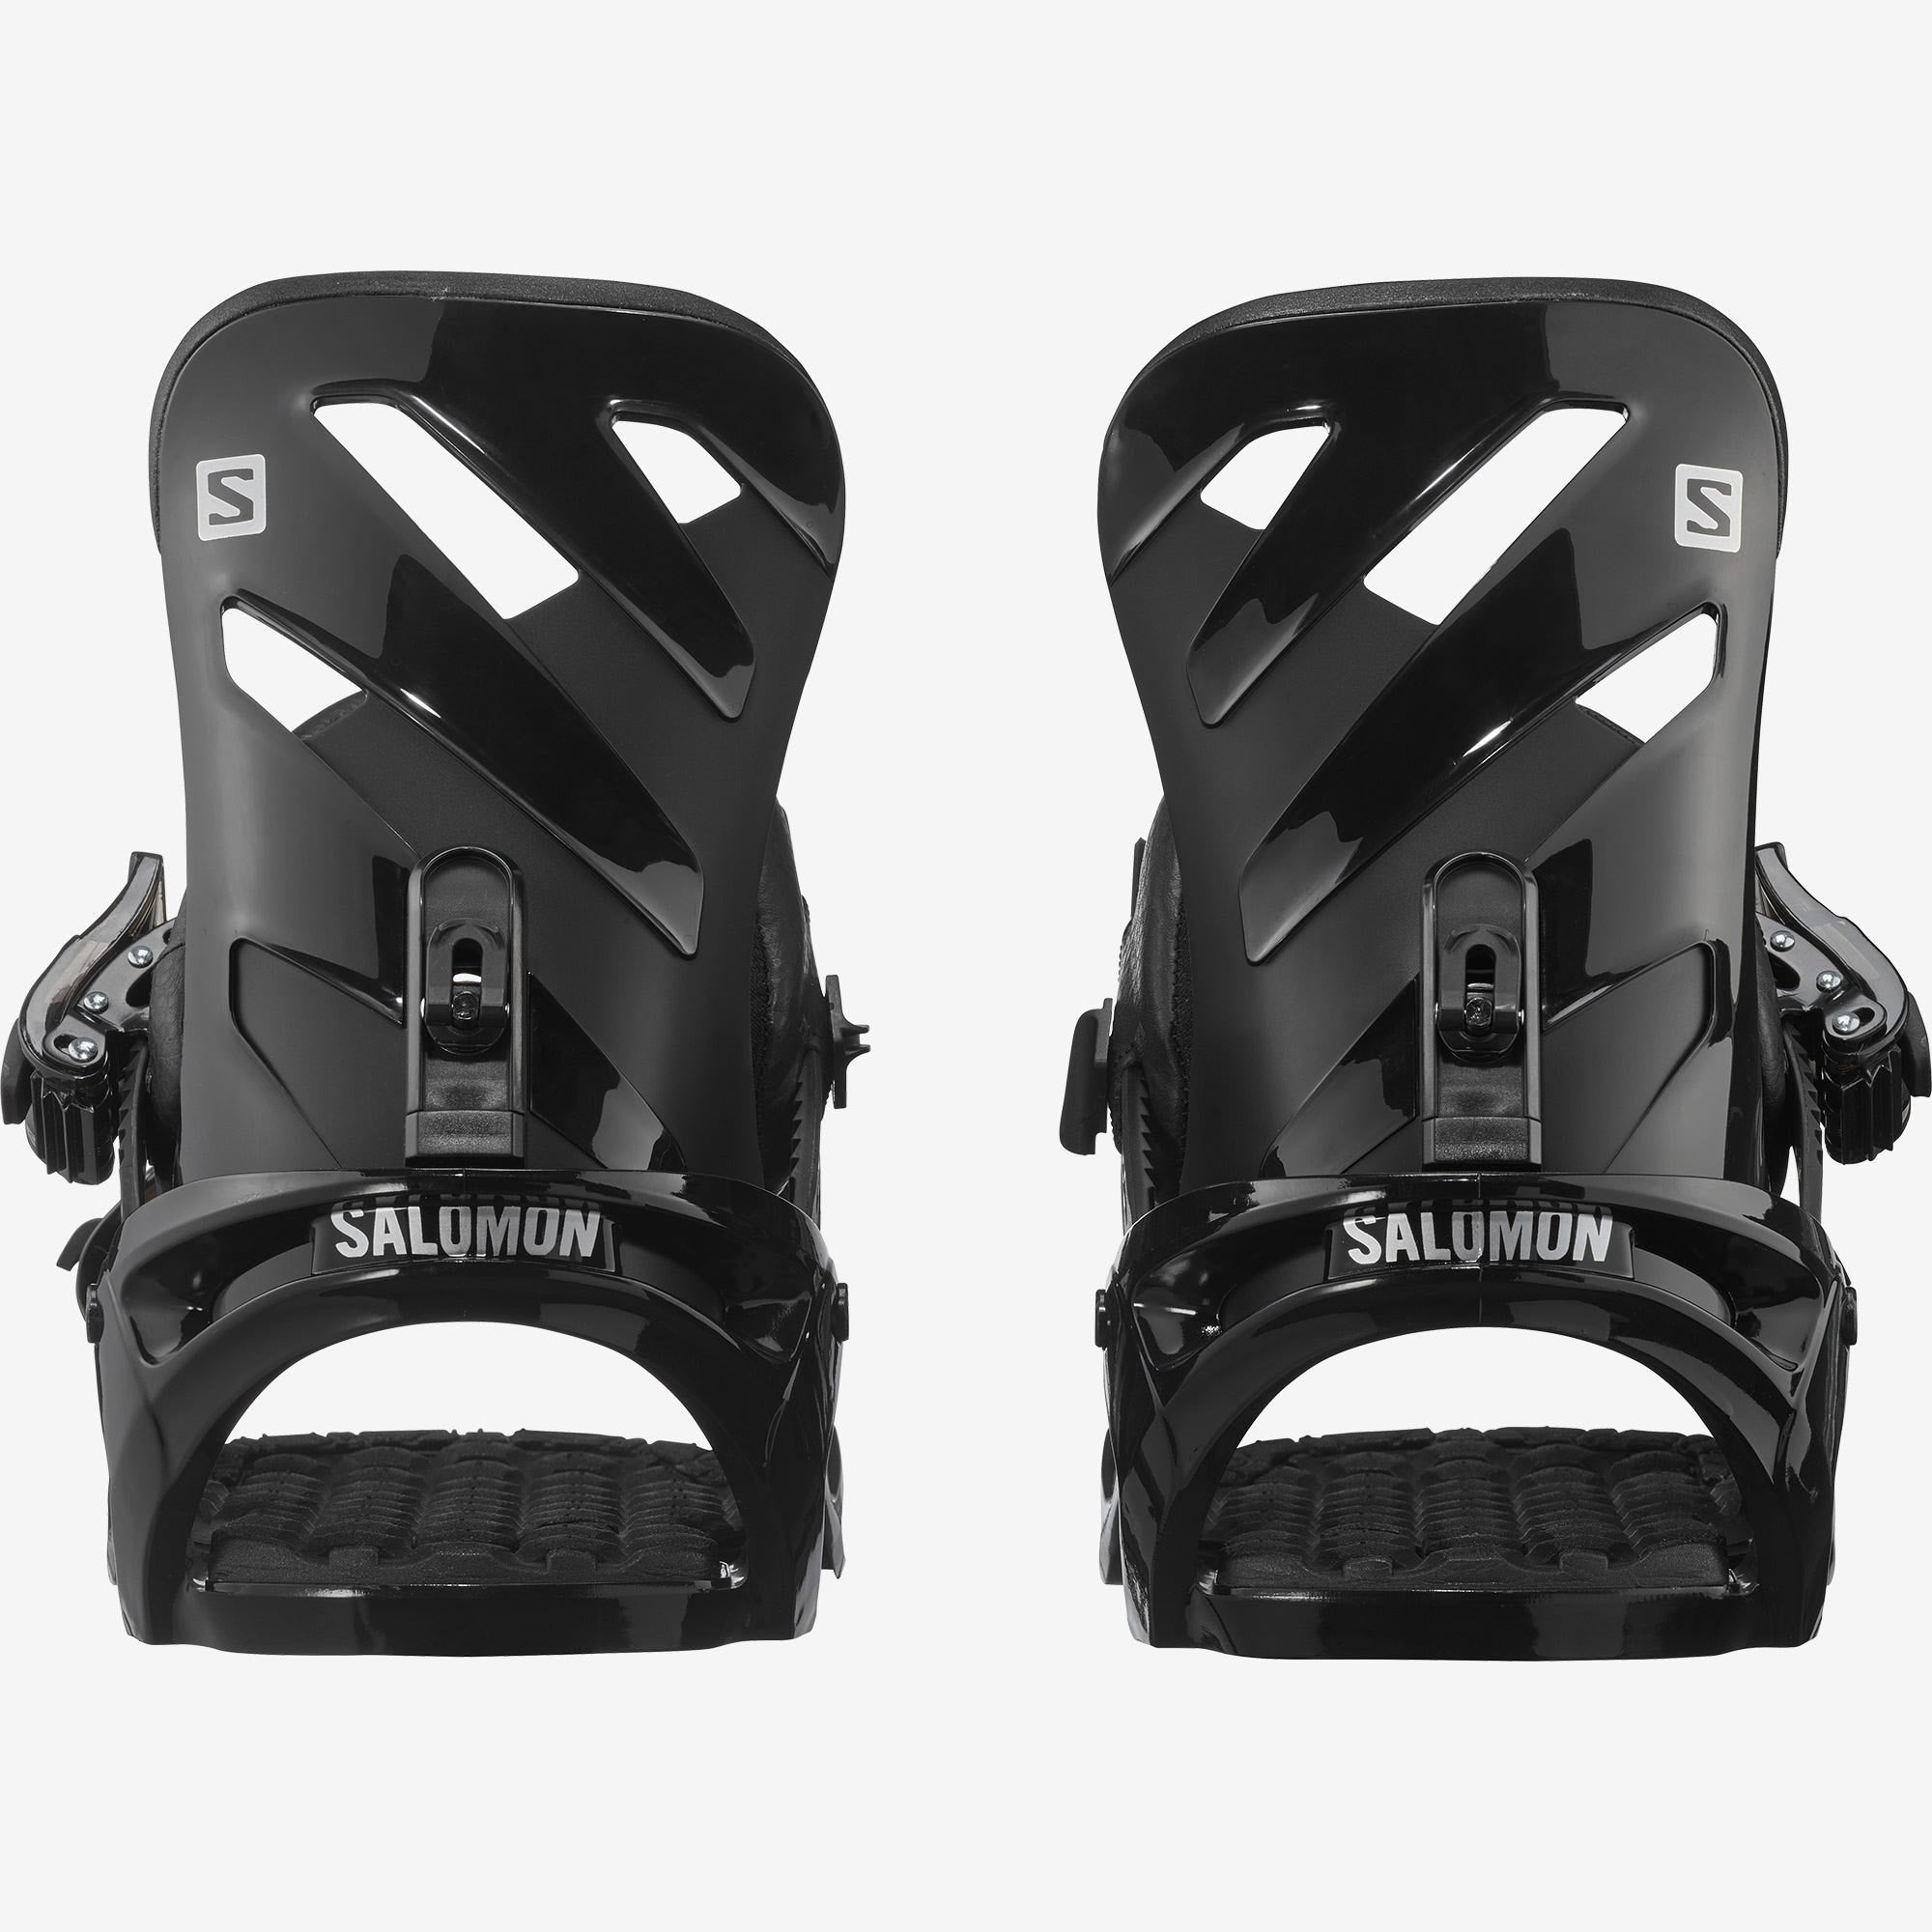 Salomon Rhythm - Black - Snowboard Binding